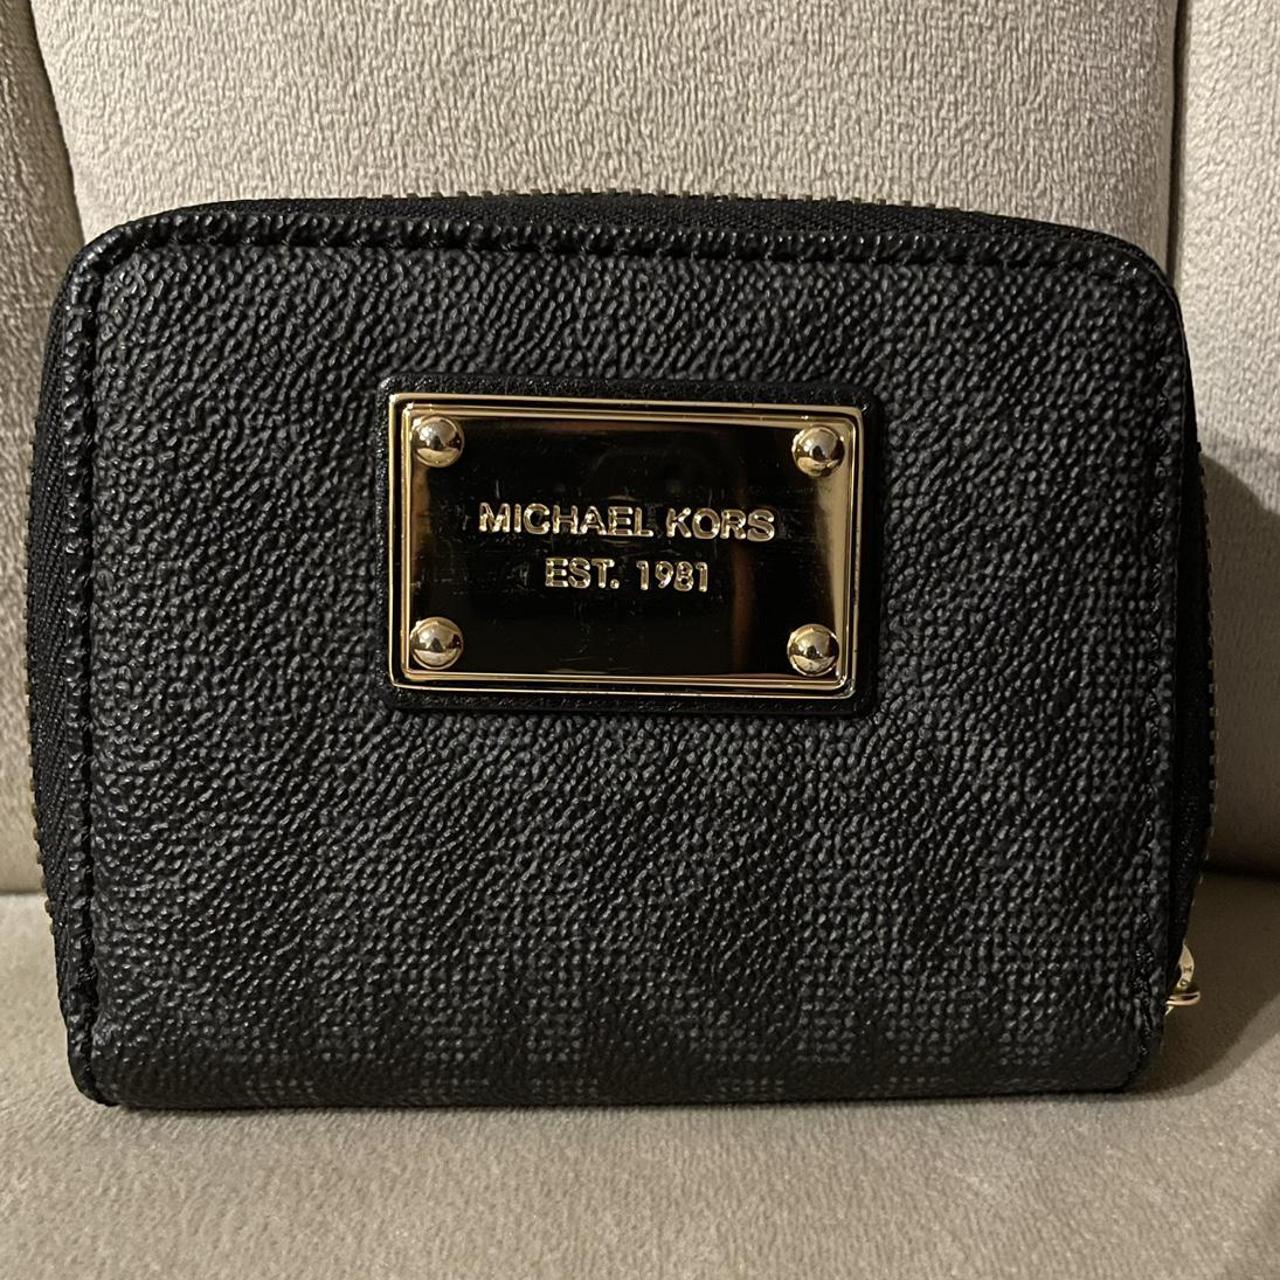 Michael Kors small black wallet #michaelkors - Depop